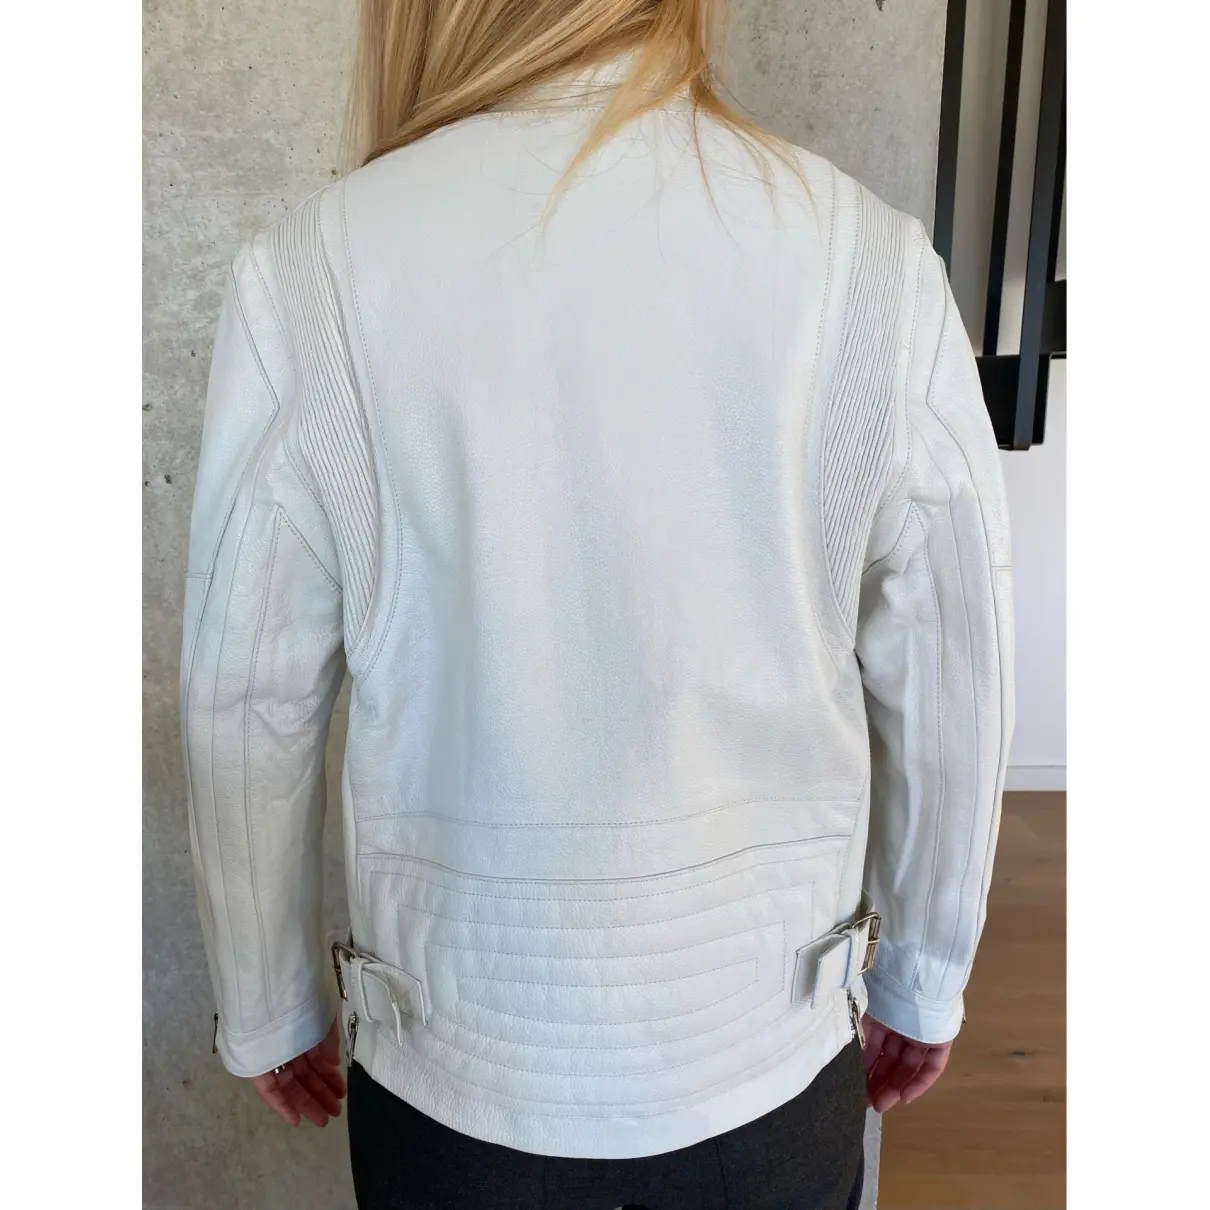 Buy Zadig & Voltaire Spring Summer 2019 leather jacket online